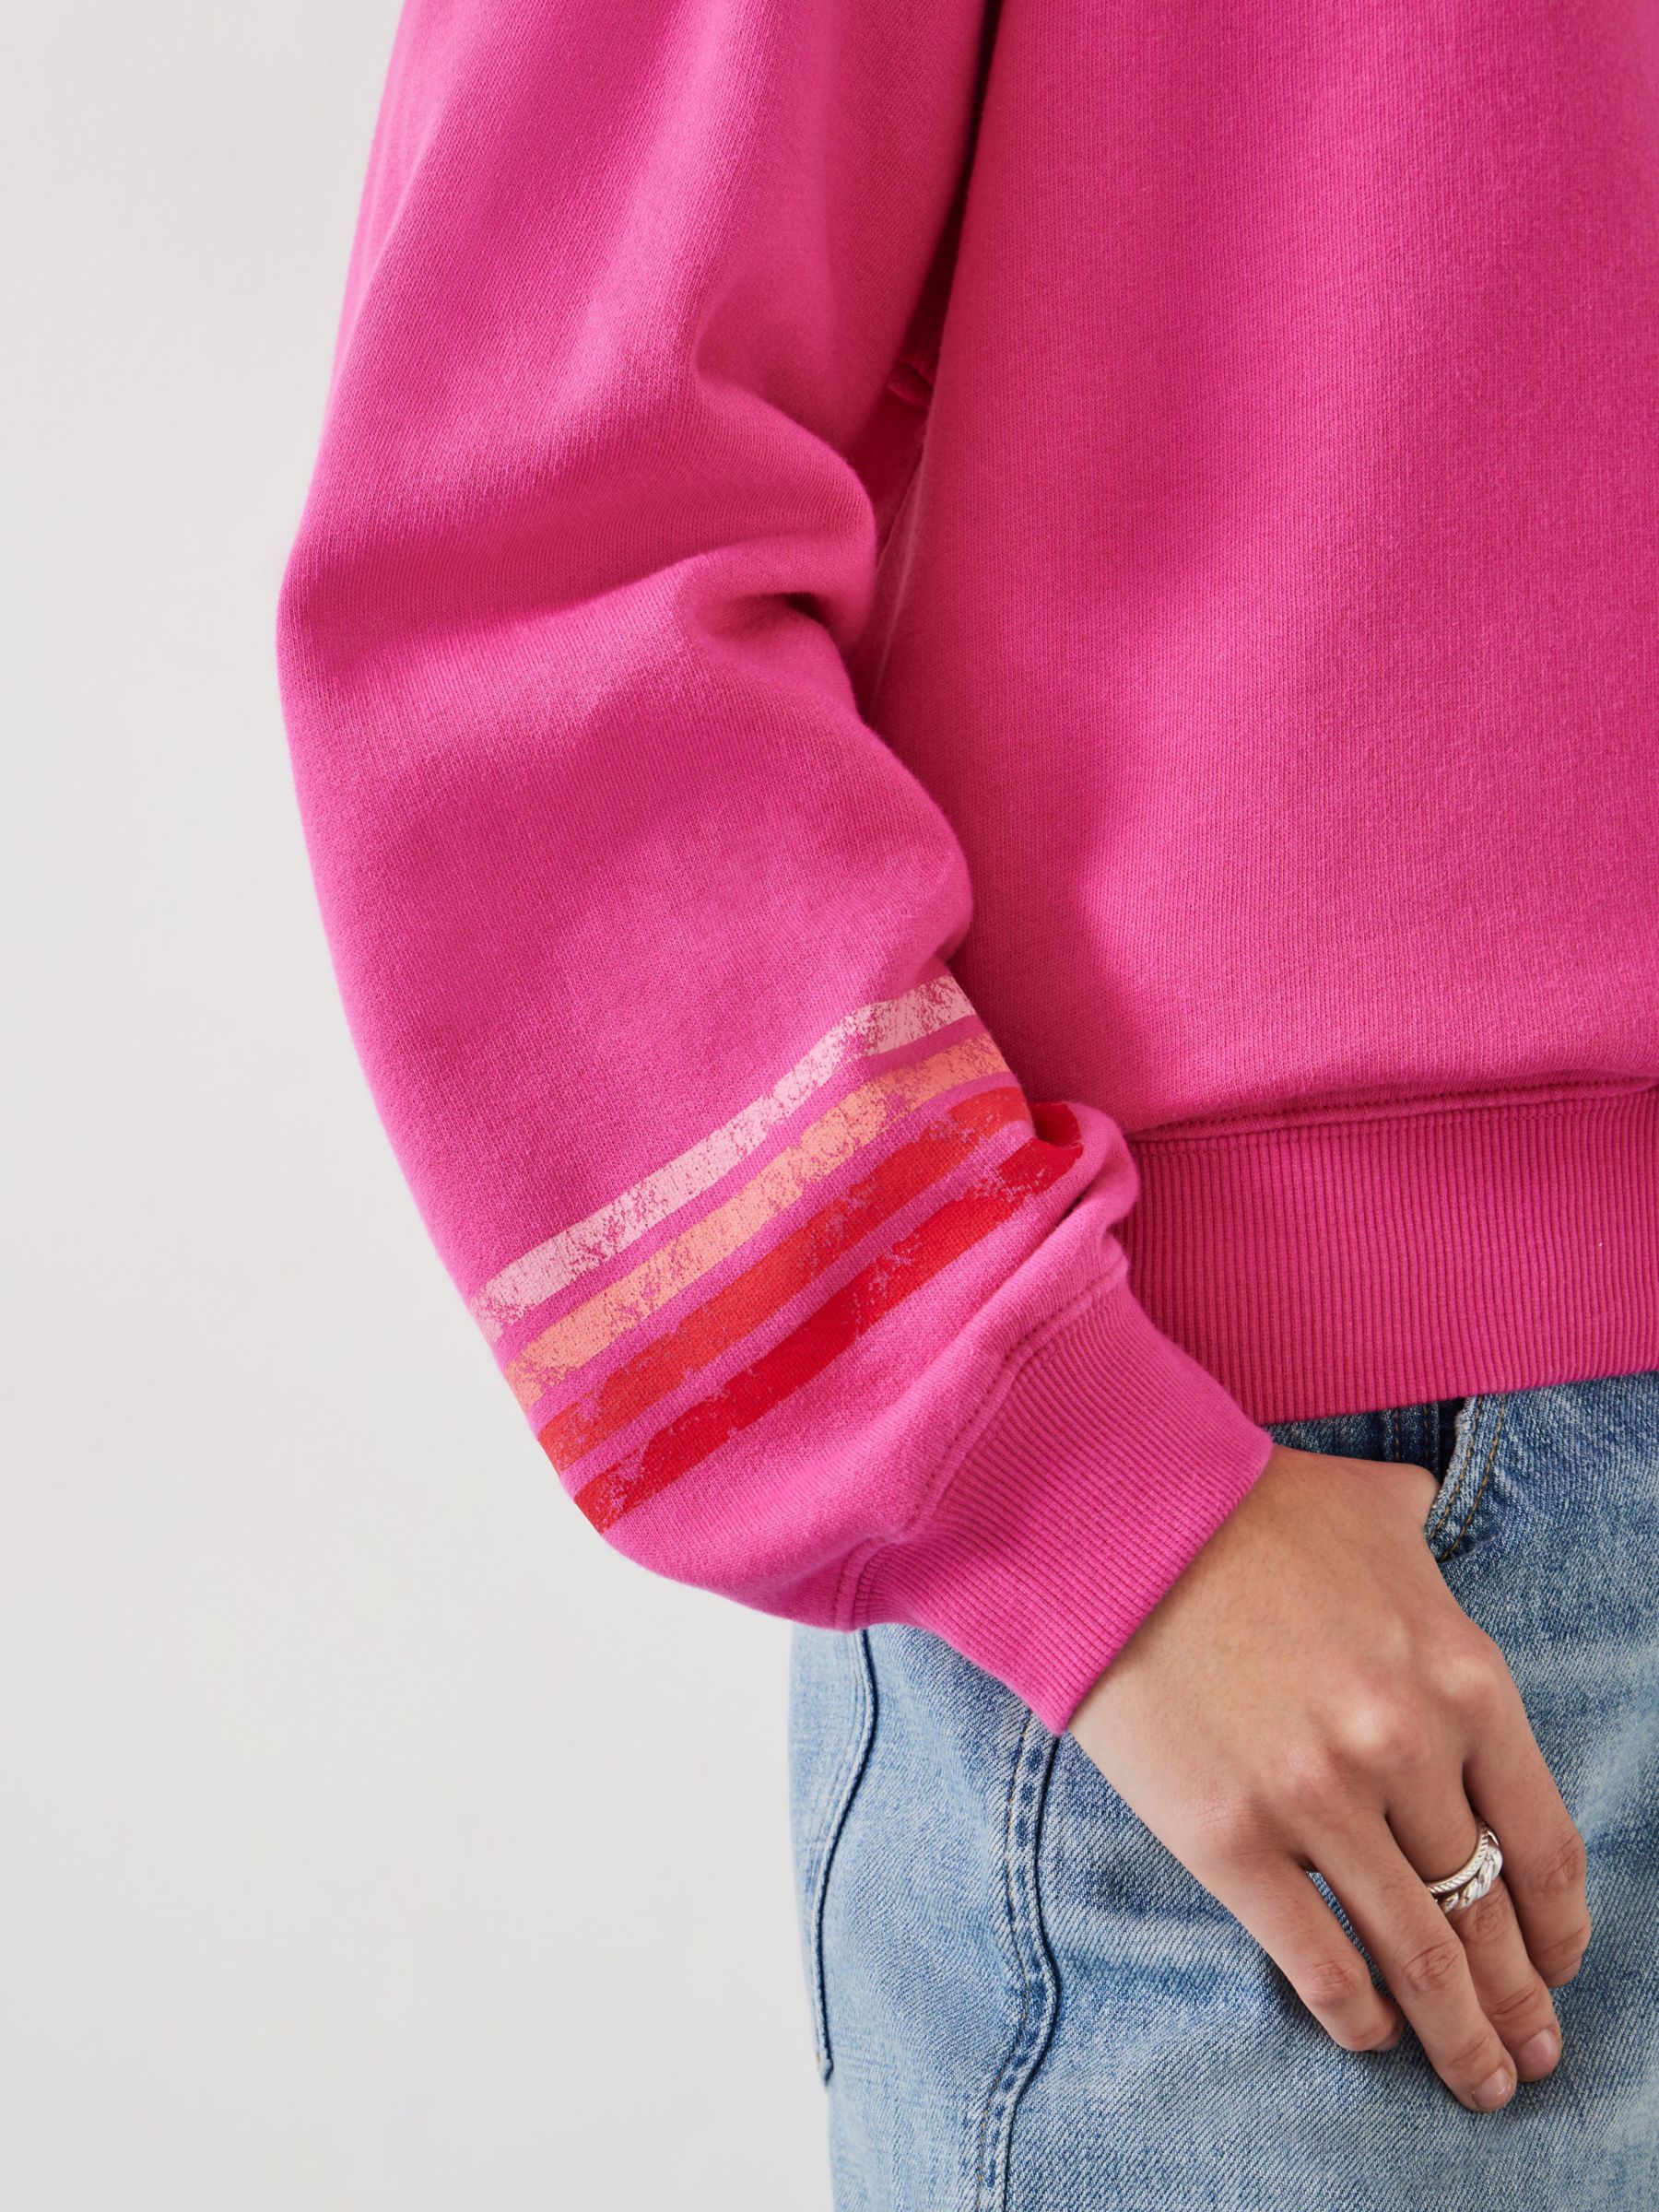 HUSH Kaelynn Contrast Stripe Sweatshirt, Vibrant Pink, XXS